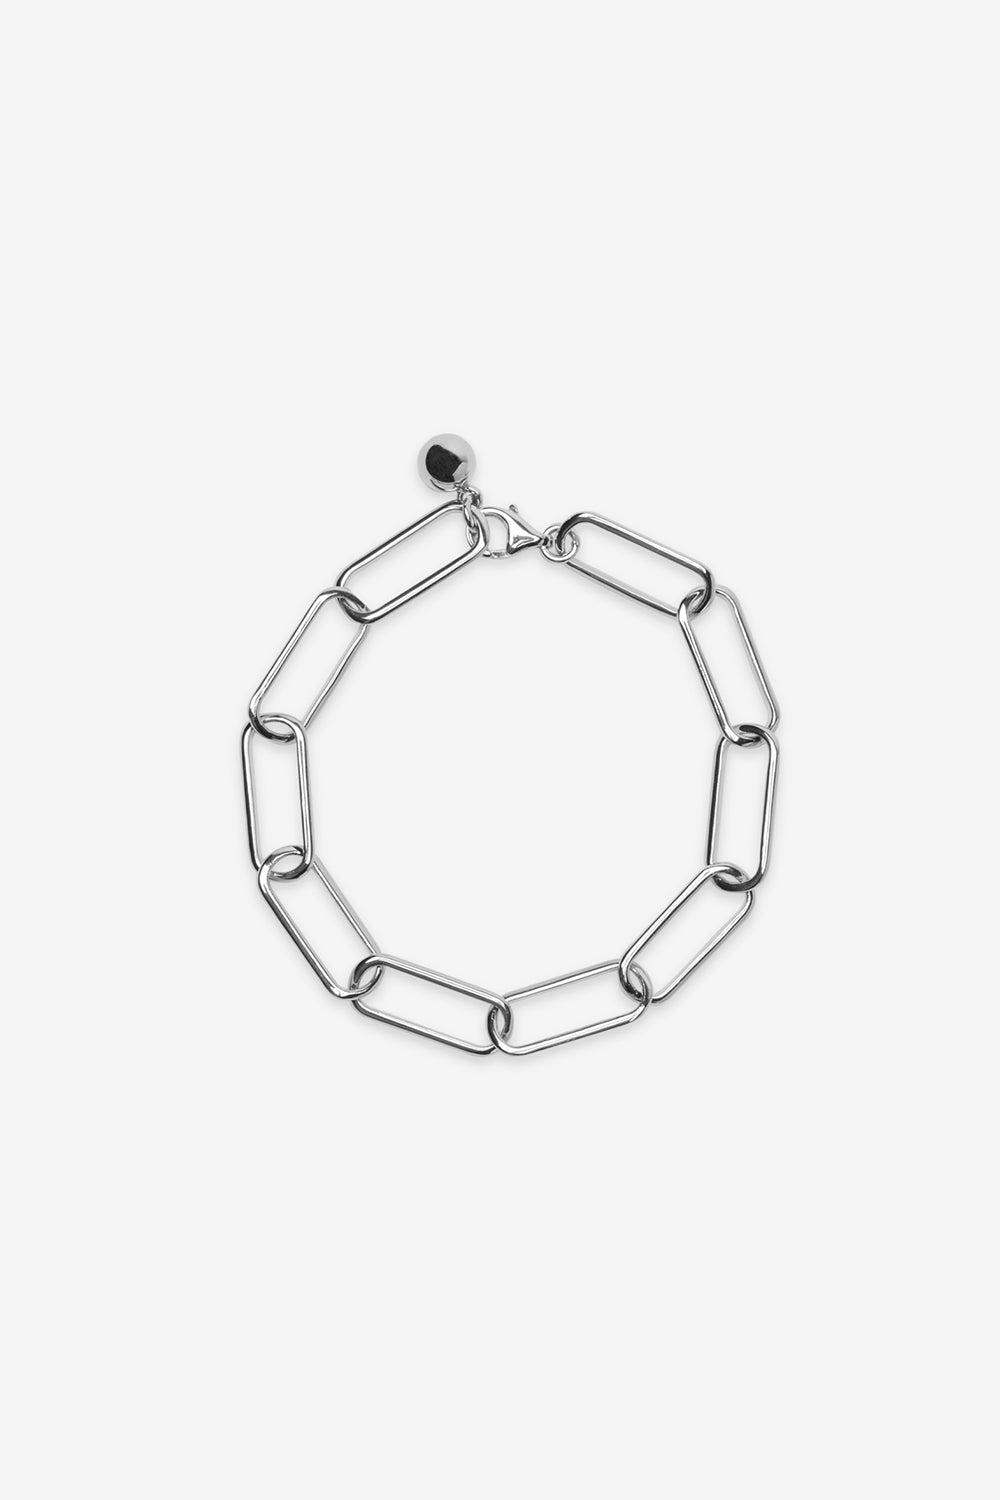 Flash Jewellery Eight Chain Bracelet in Sterling Silver